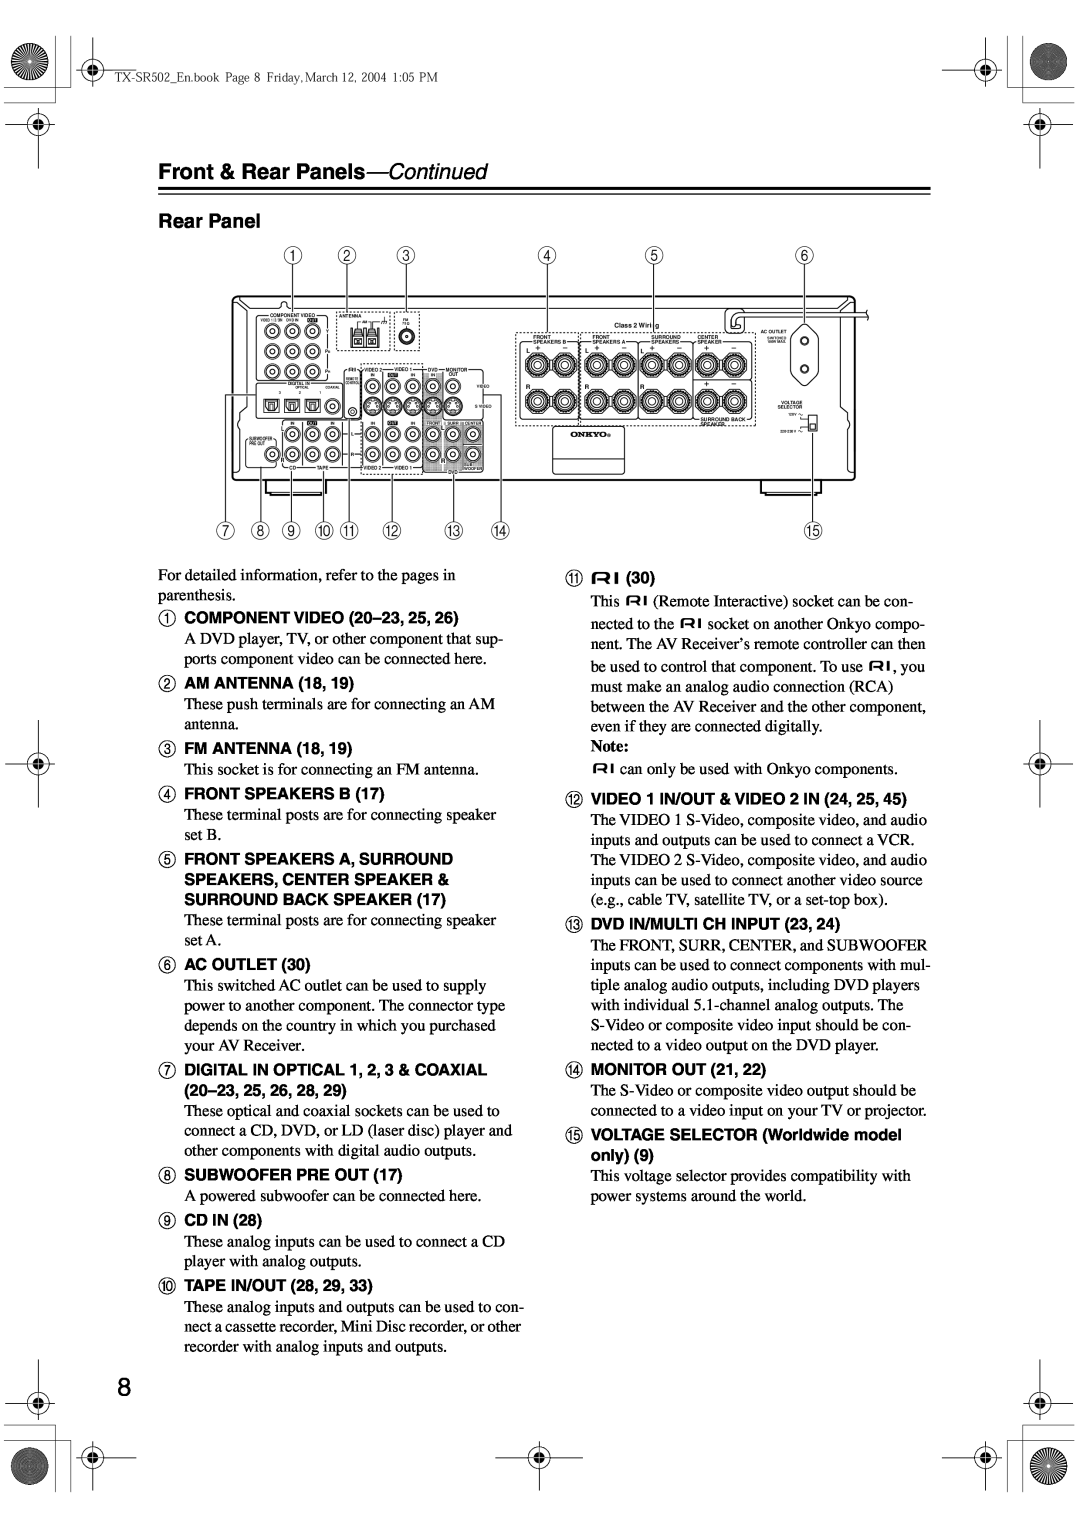 Onkyo TX-SR8250, TX-SR502E instruction manual Front & Rear Panels-Continued, 7 8 9 J K 